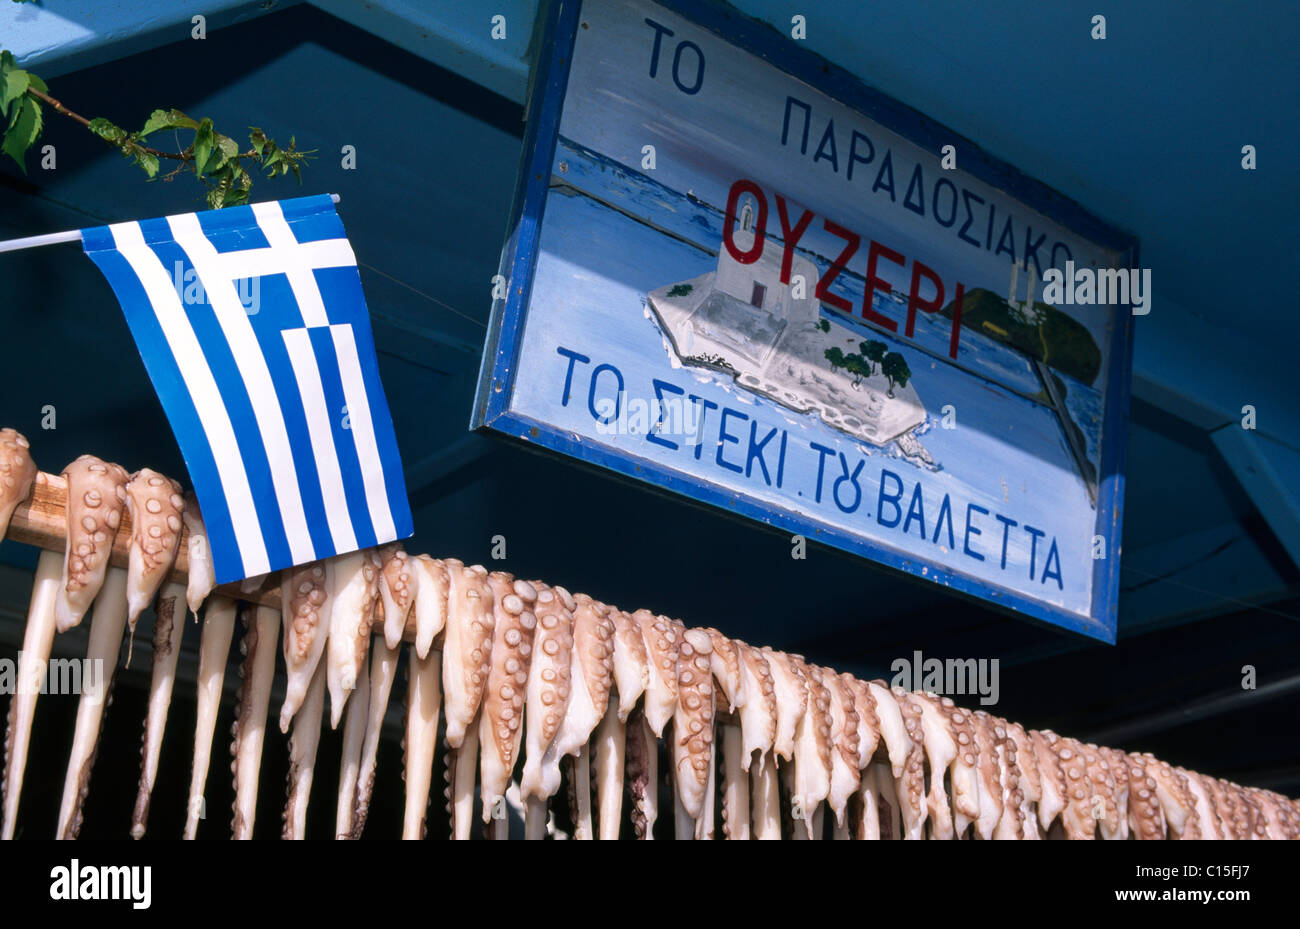 Oktopus, Taverne, Stadt Naxos, Insel Naxos, Kykladen, Griechenland, Europa Stockfoto